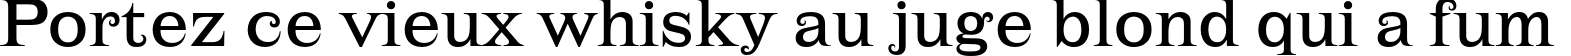 Пример написания шрифтом LehmannC текста на французском